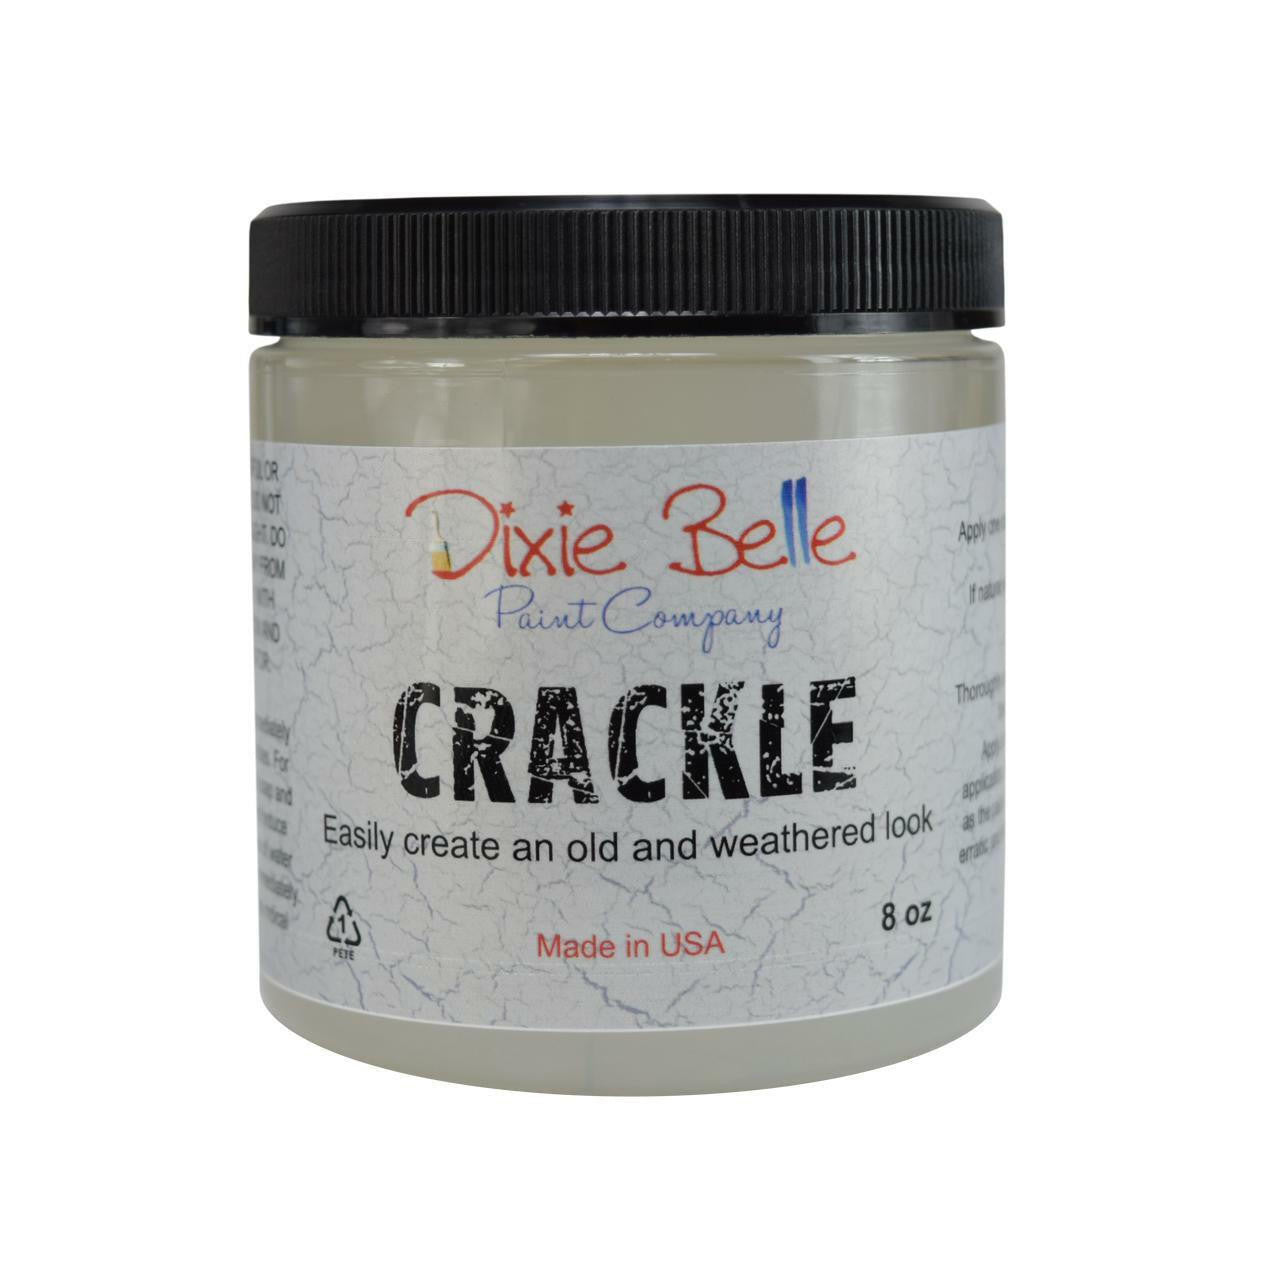 Crackle (8oz.) by Dixie Belle